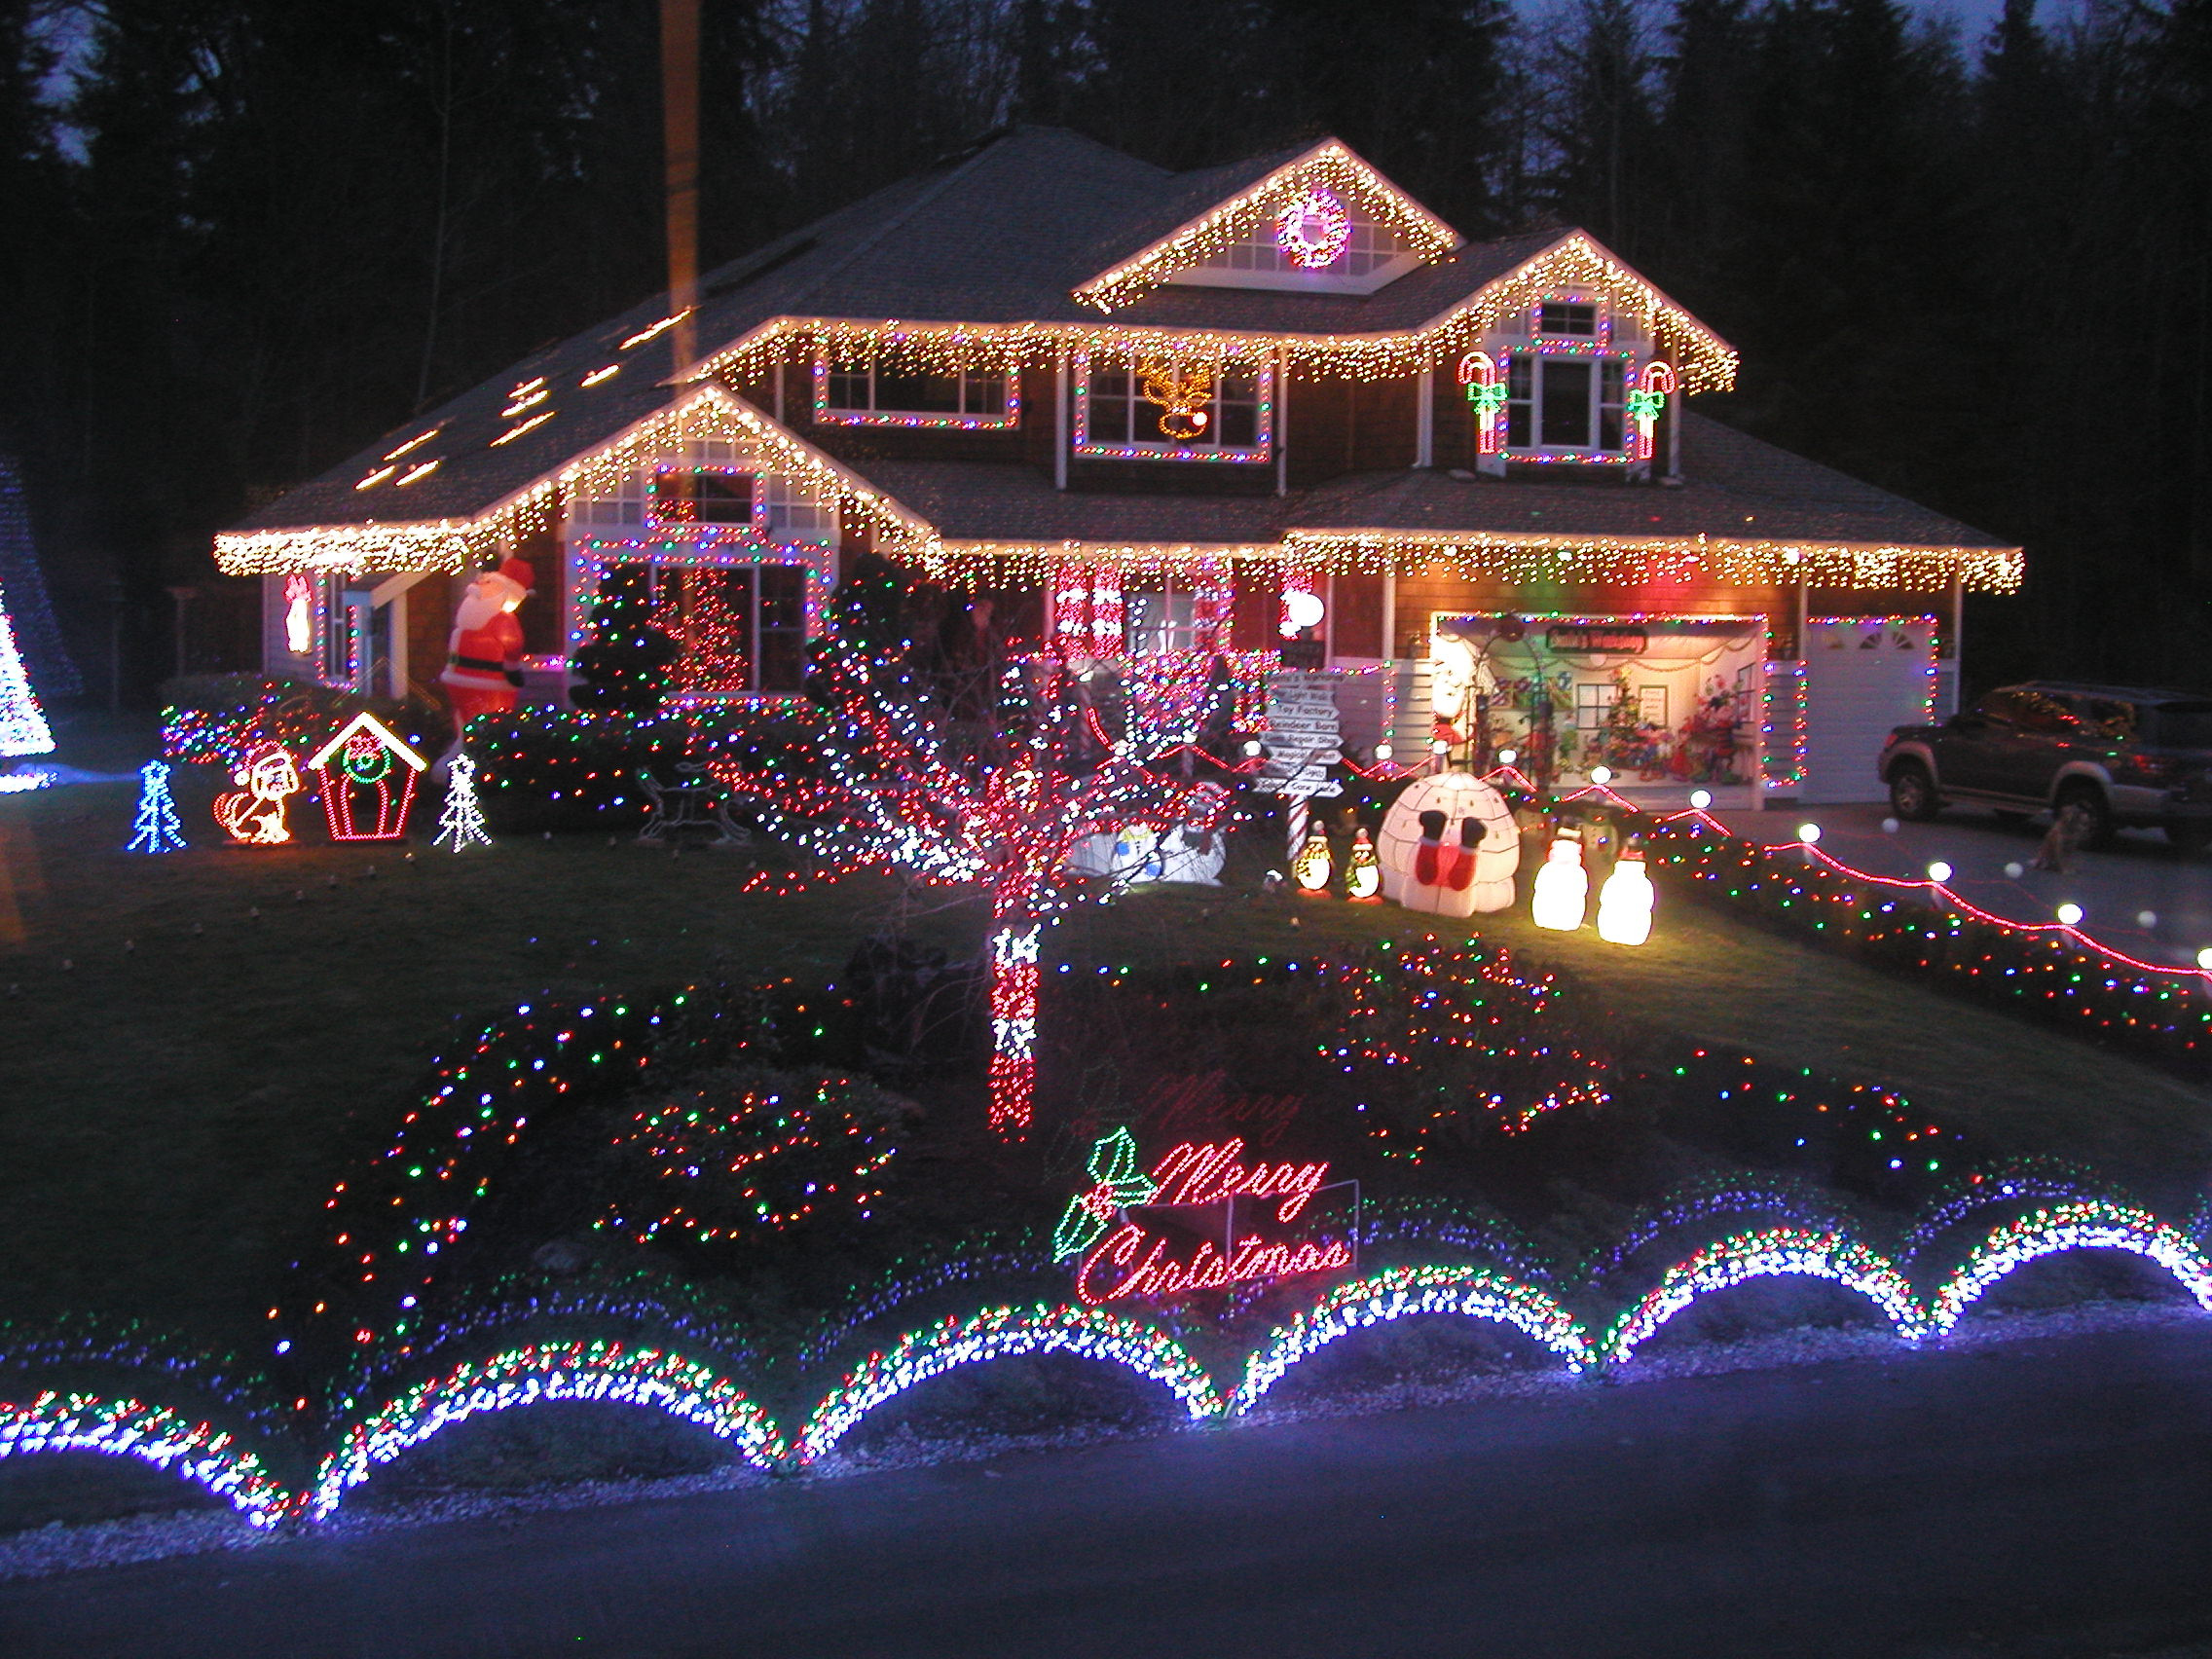 Musical Christmas Lighting
 Extra thing for your home outdoor Christmas light display